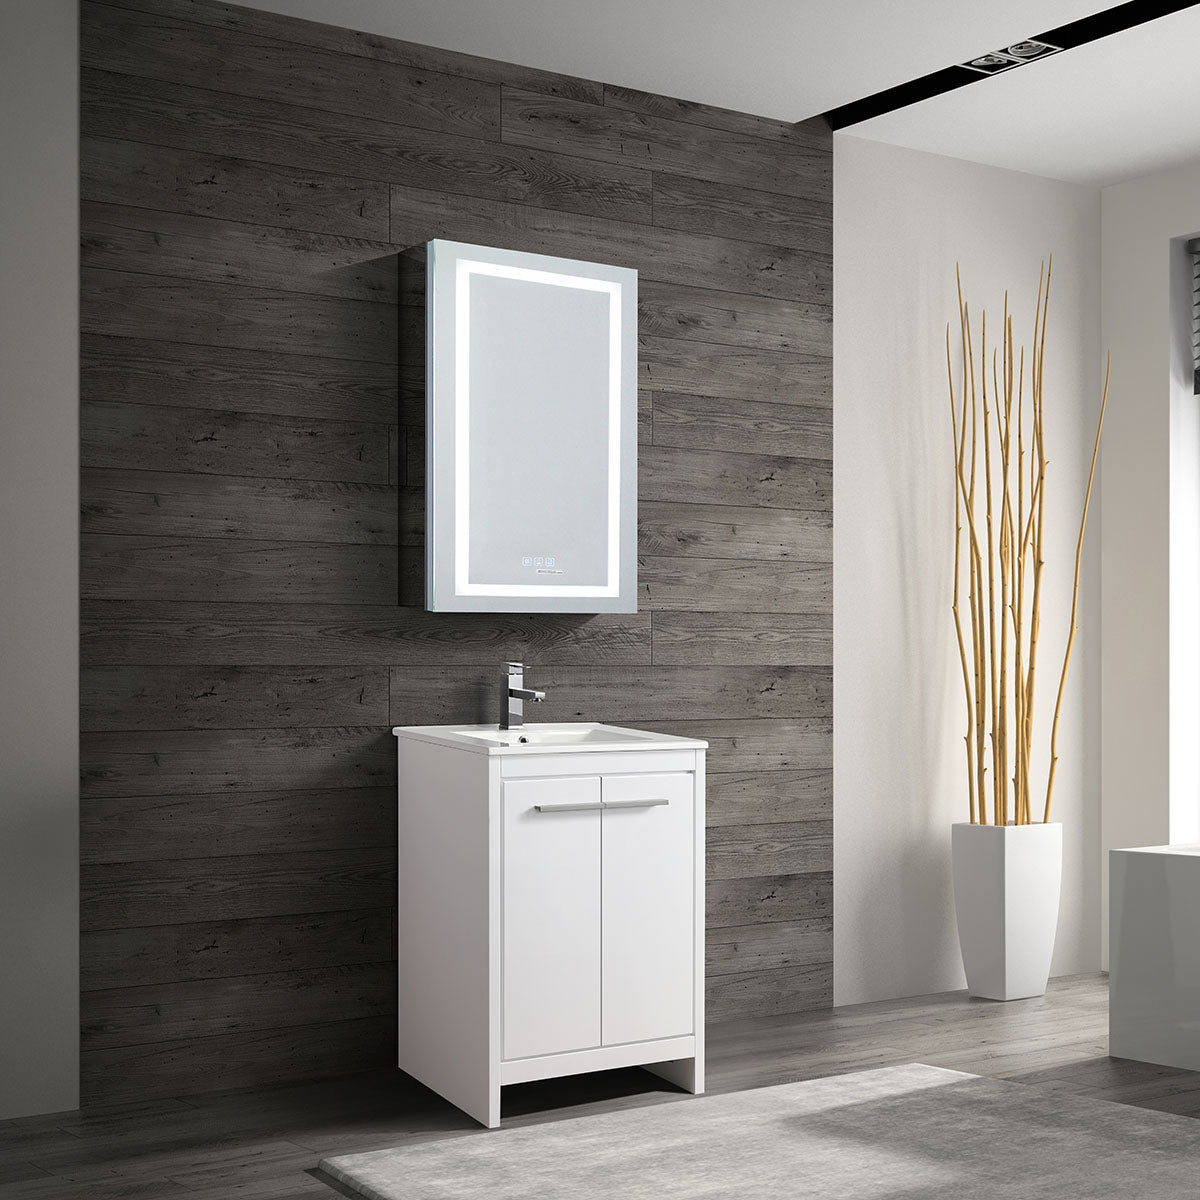 24"  Vanity with Ceramic Sink (Glossy White)  V9004 Series - iStyle Bath